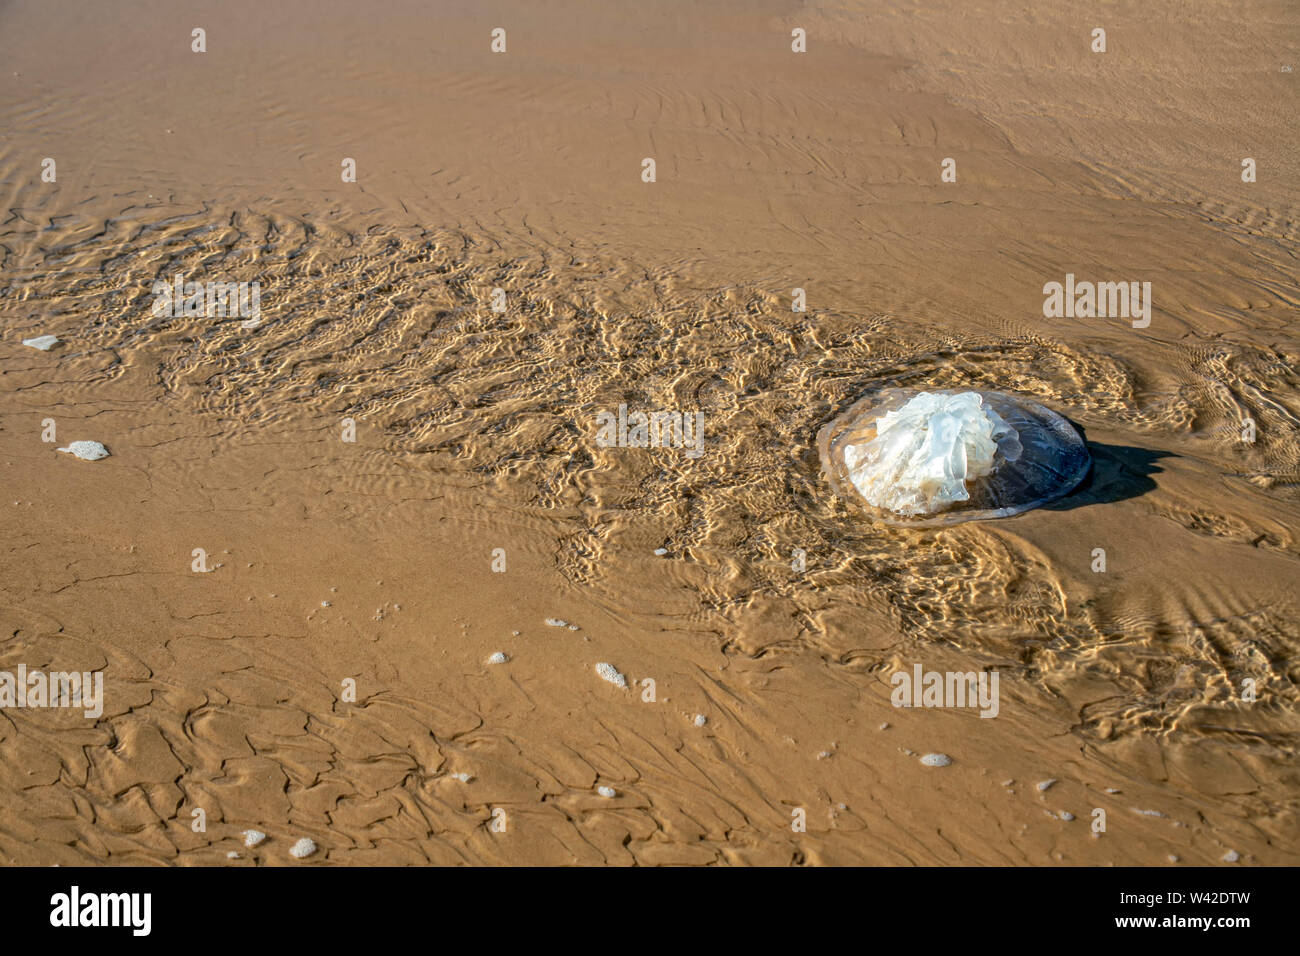 Rhopilema nomadica jellyfish on the coastal sand. Mediterranean Sea. Stock Photo